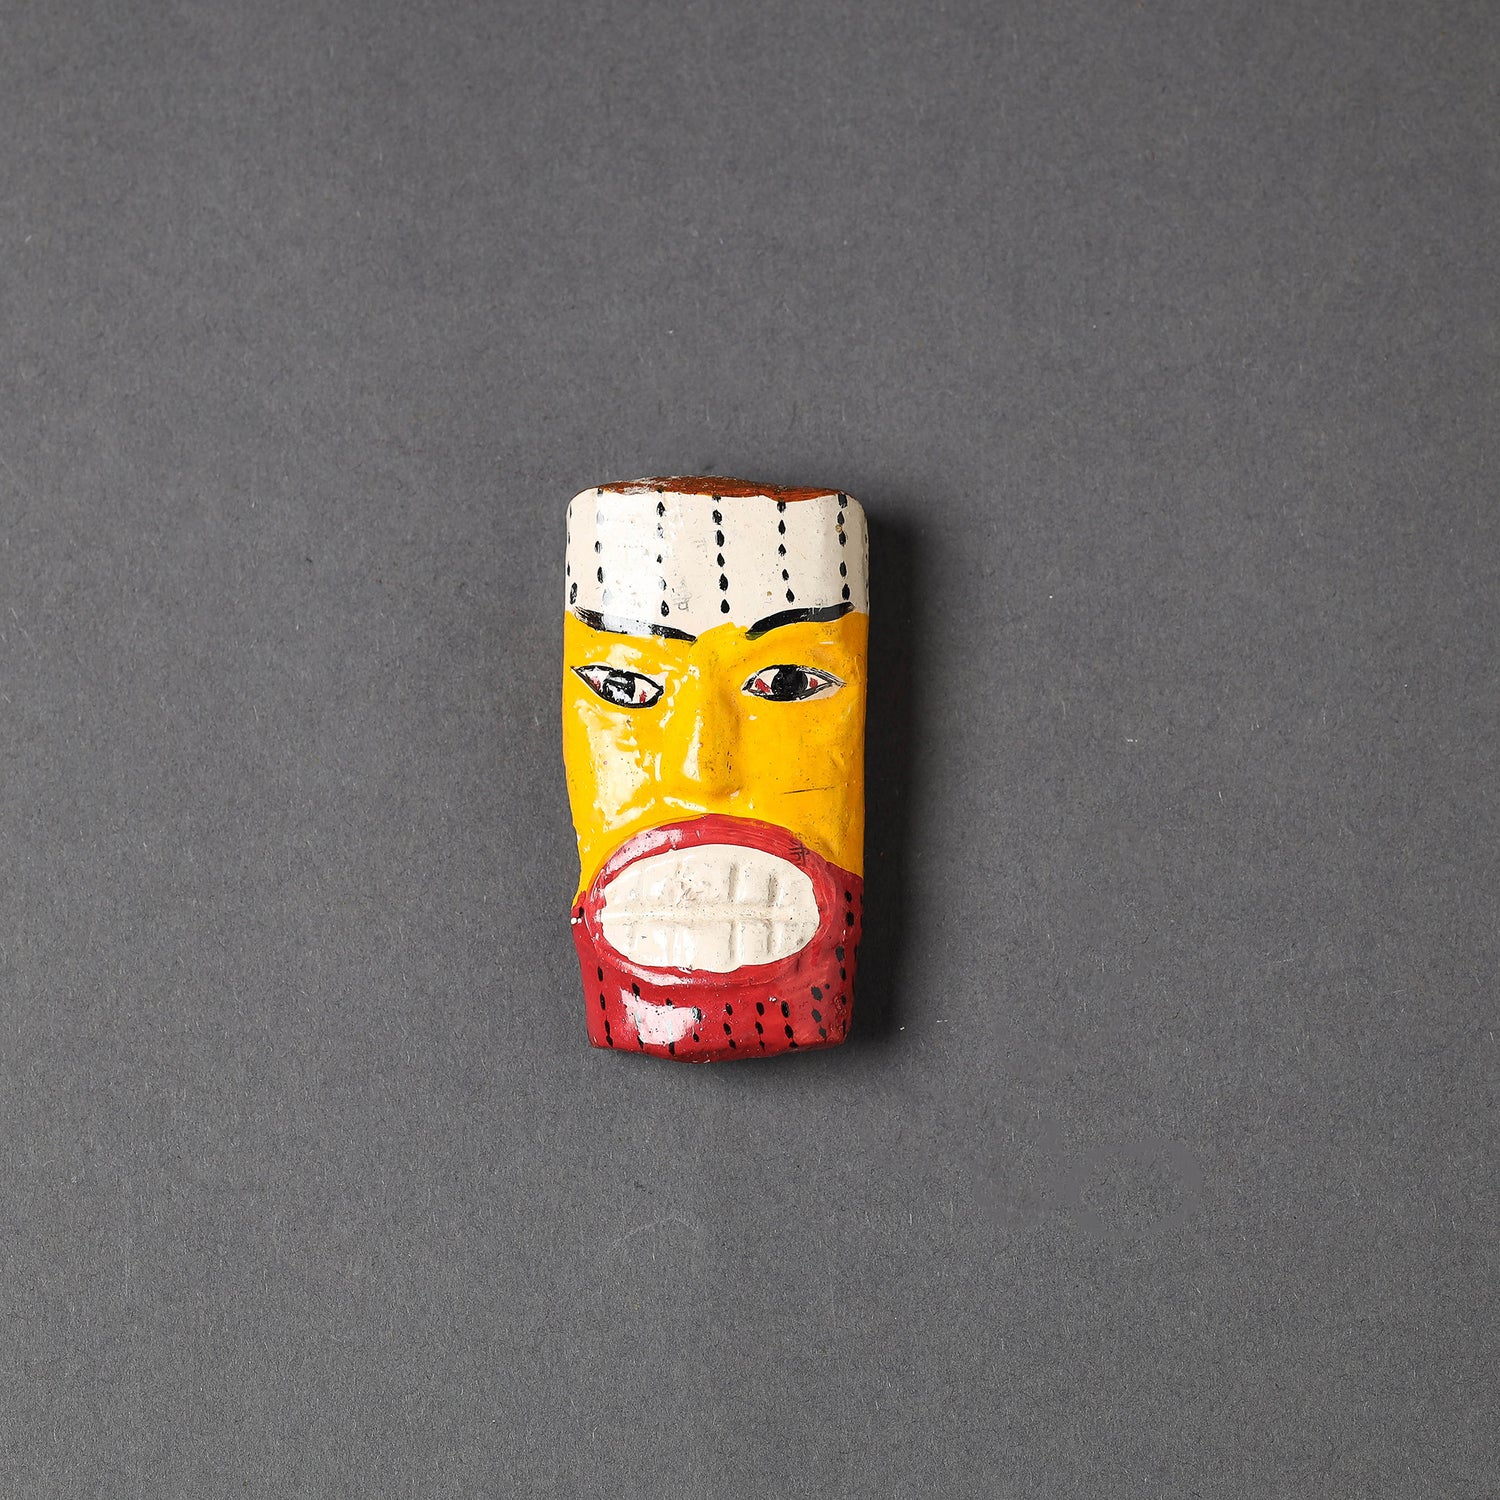 Tribal Mask - Rajasthani Handpainted Wooden Fridge Magnet